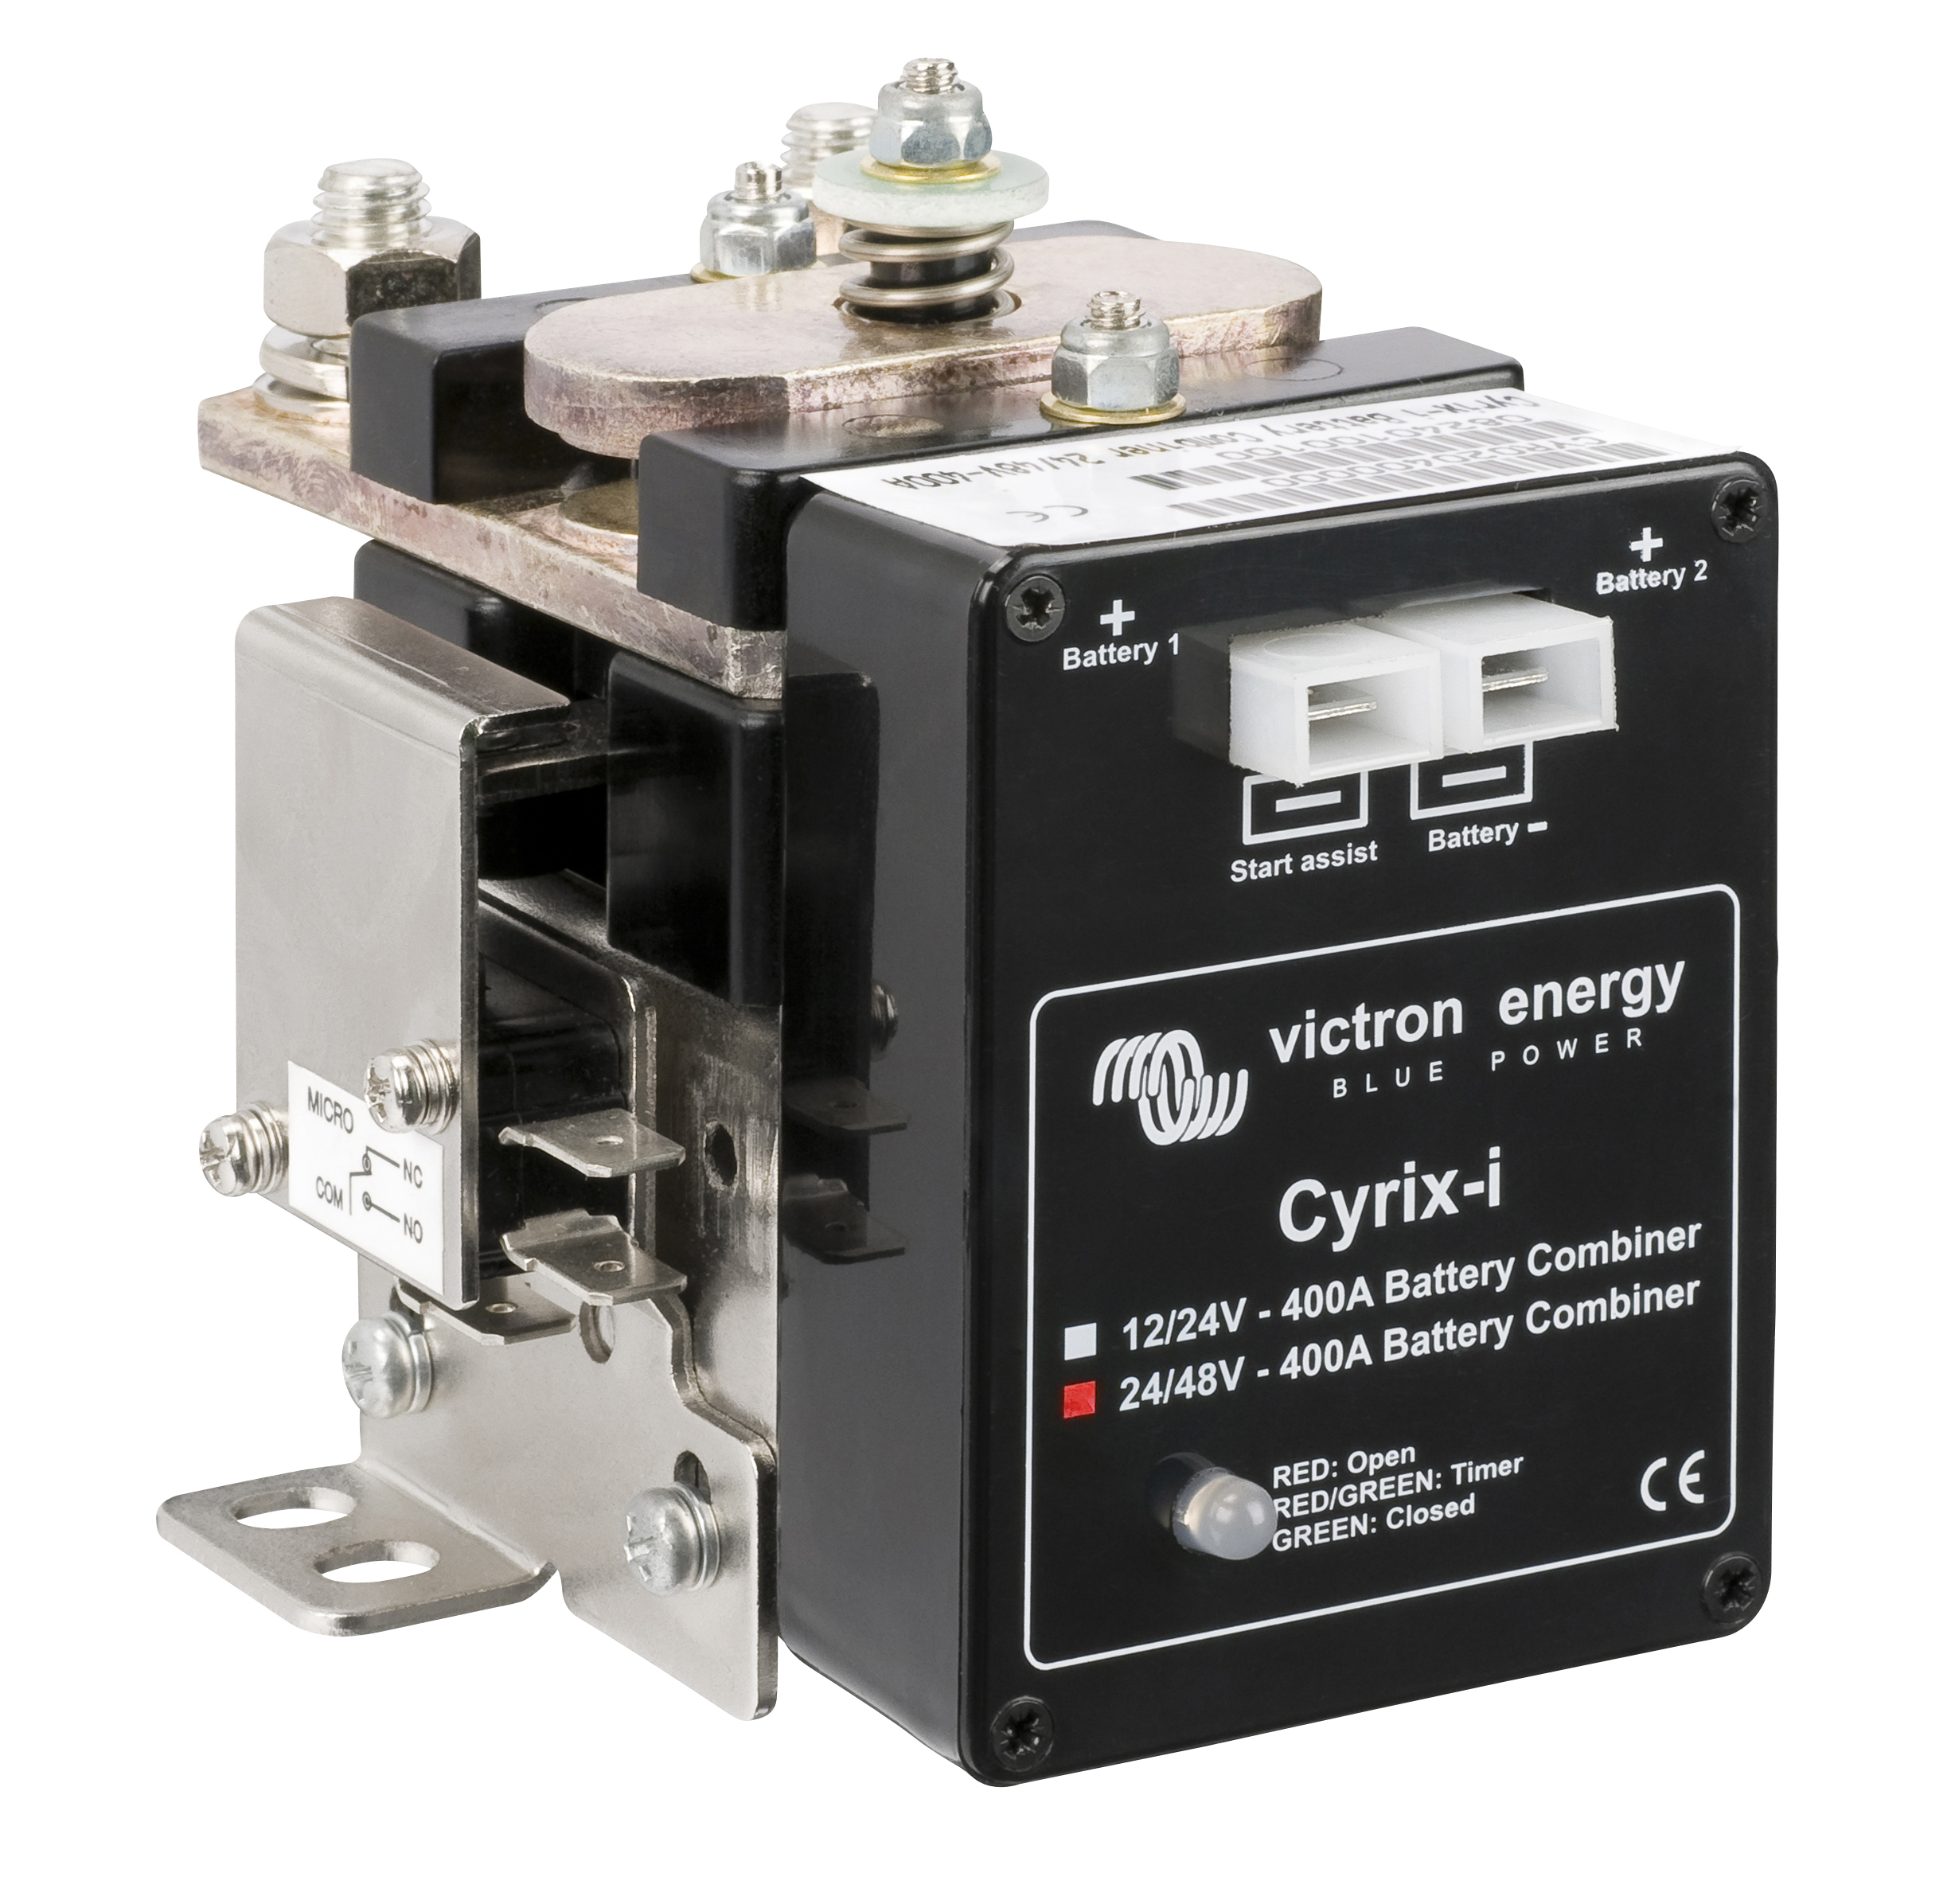 Cyrix-ct 12/24V 120A Victron energy 